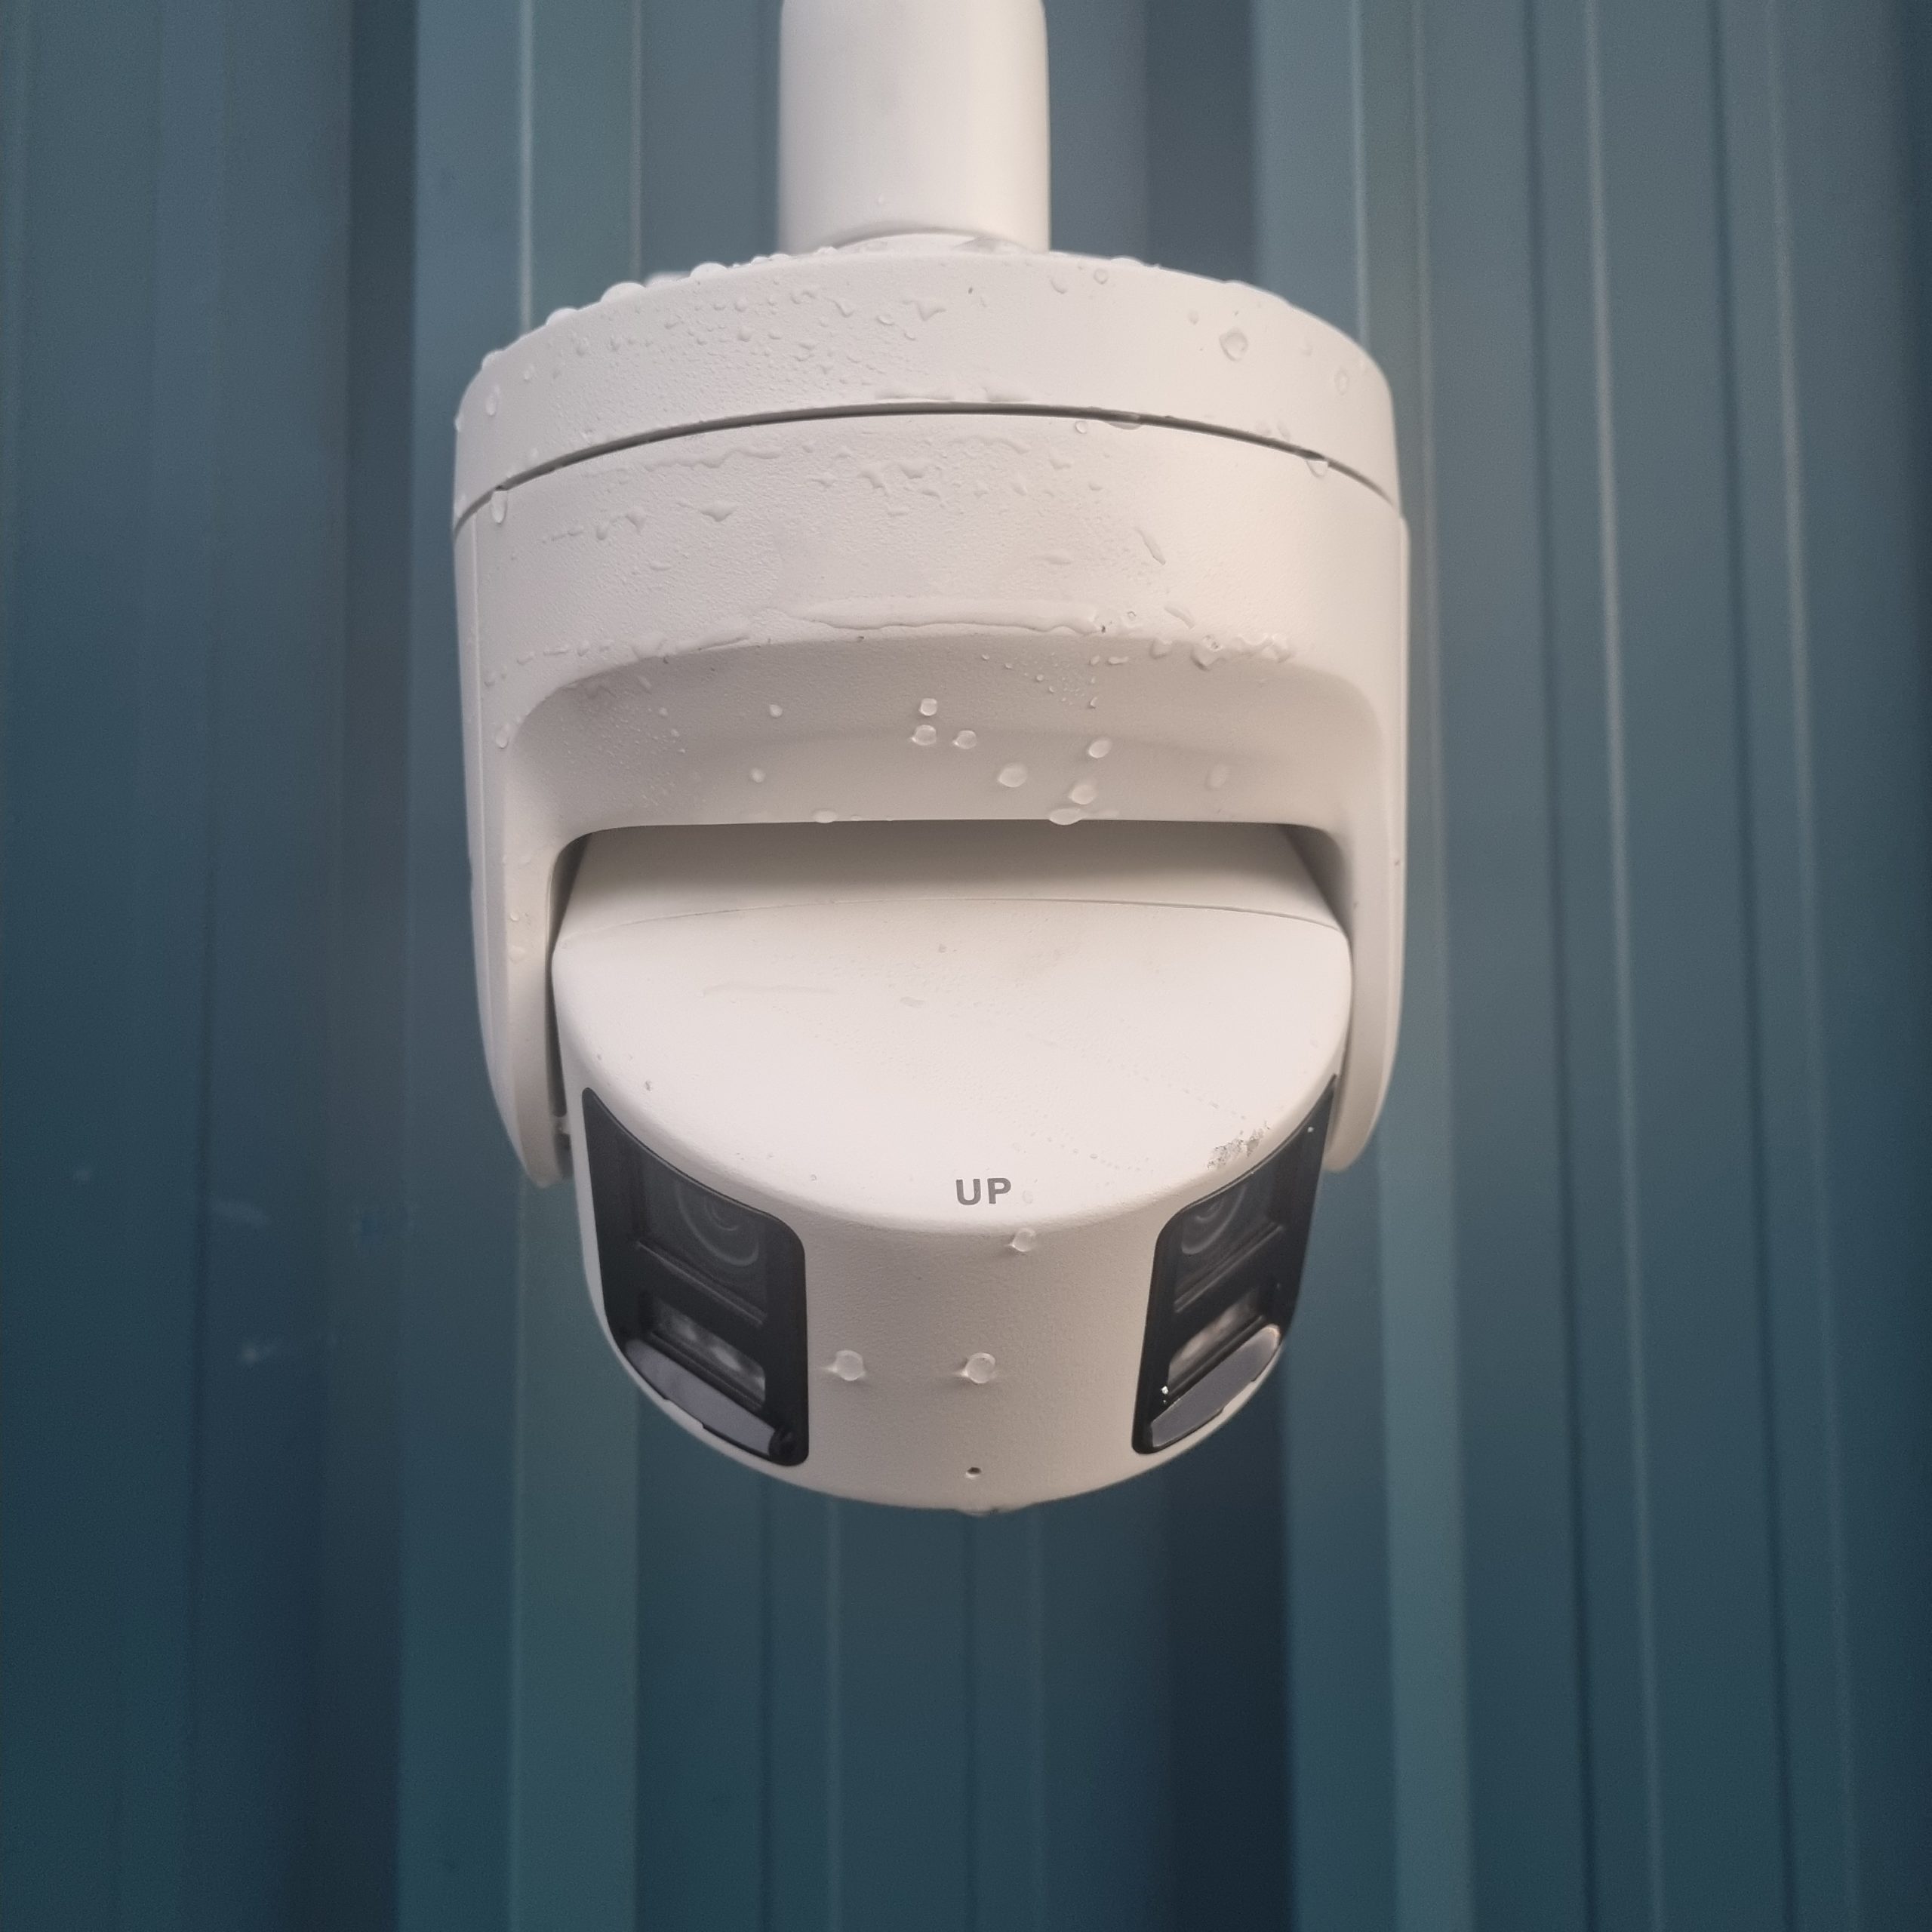 A white CCTV camera on a blue metal wall